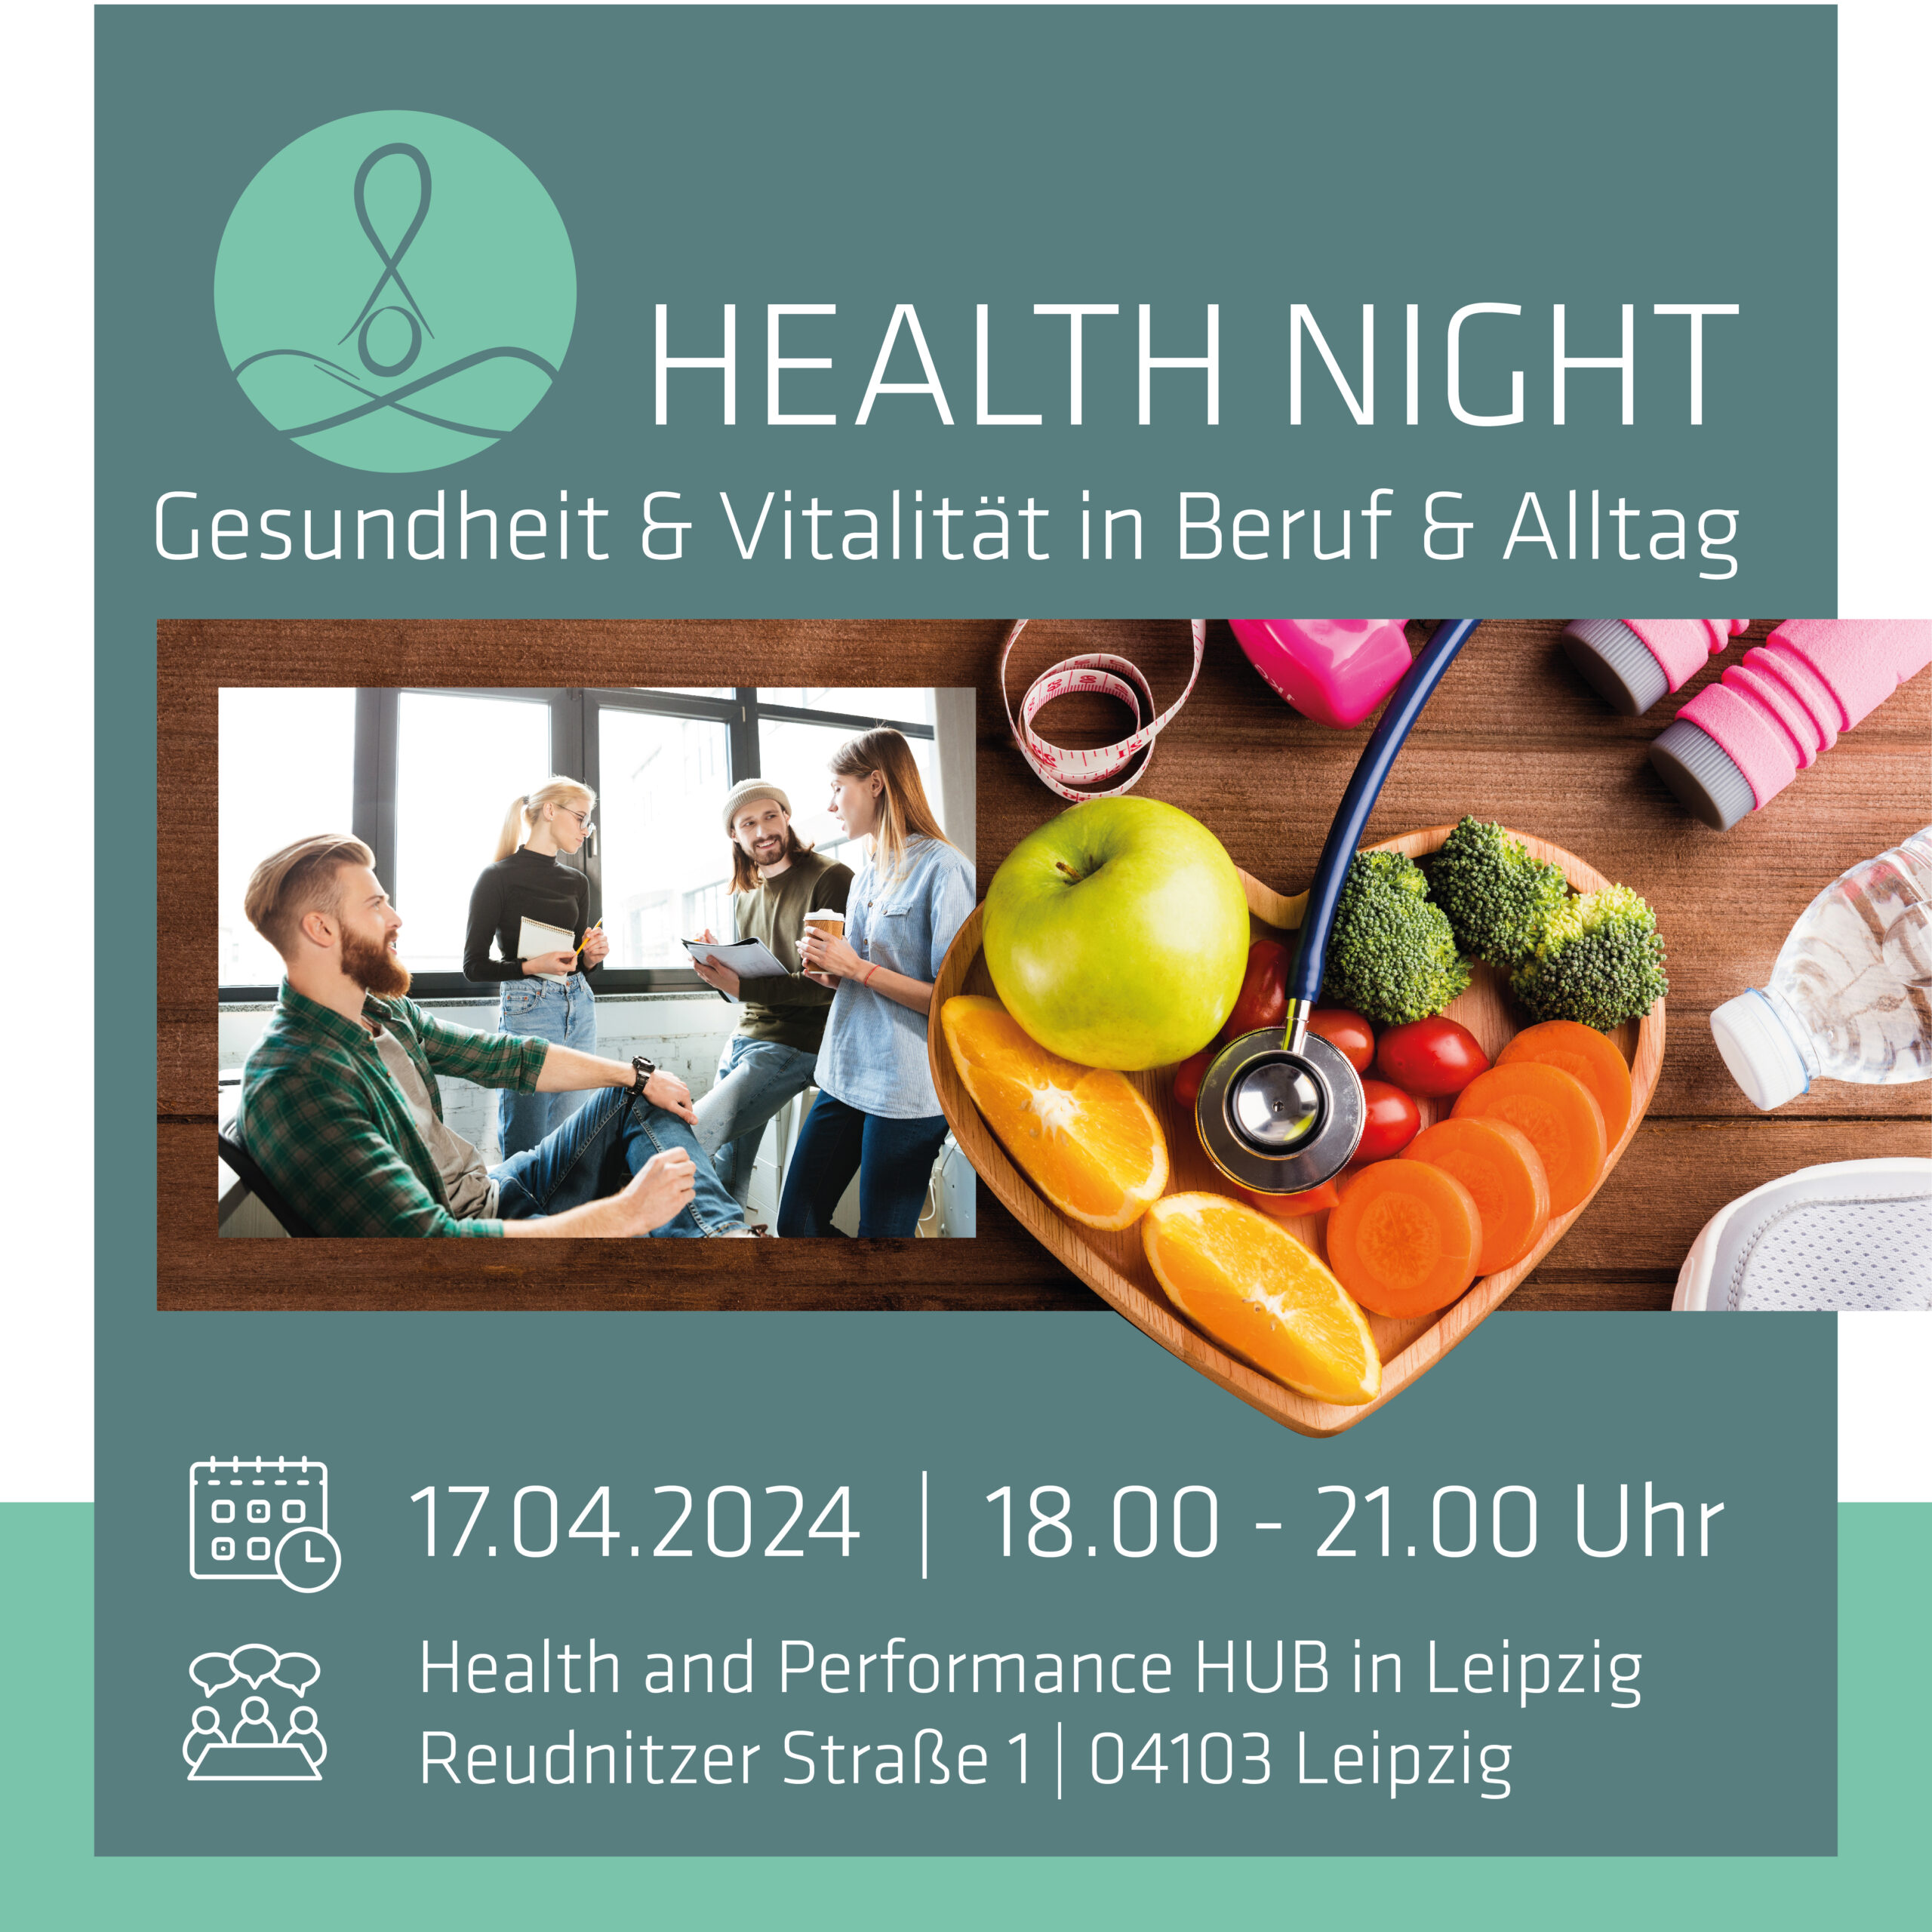 Health Night Leipzig HUB - Gesunheit & Vitalität in Beruf & Alltag